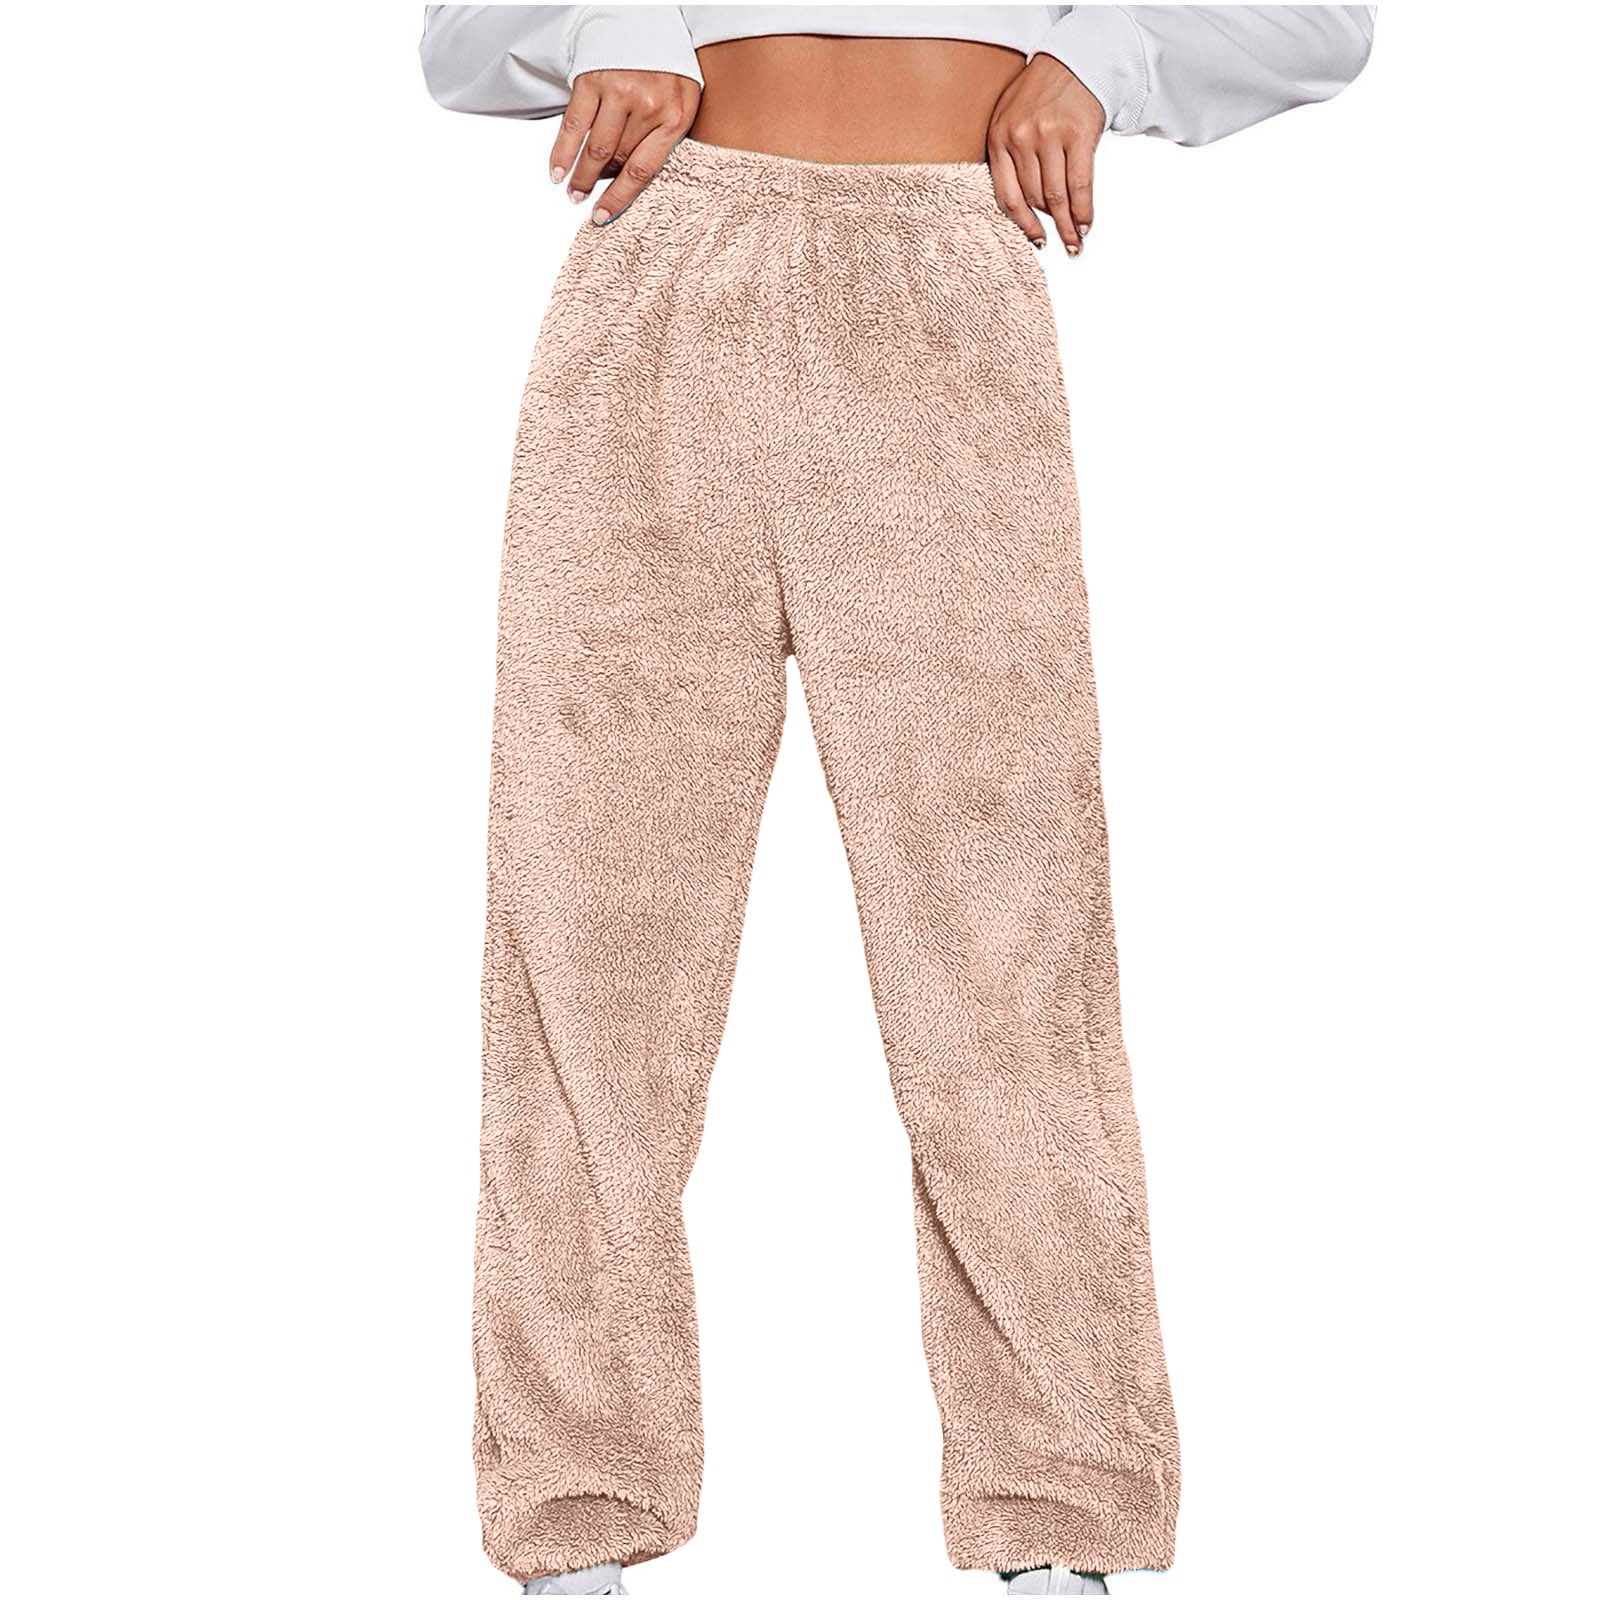 JWZUY Women Warm Fleece Drawstring Pajama Pants Jogger Plush Fuzzy